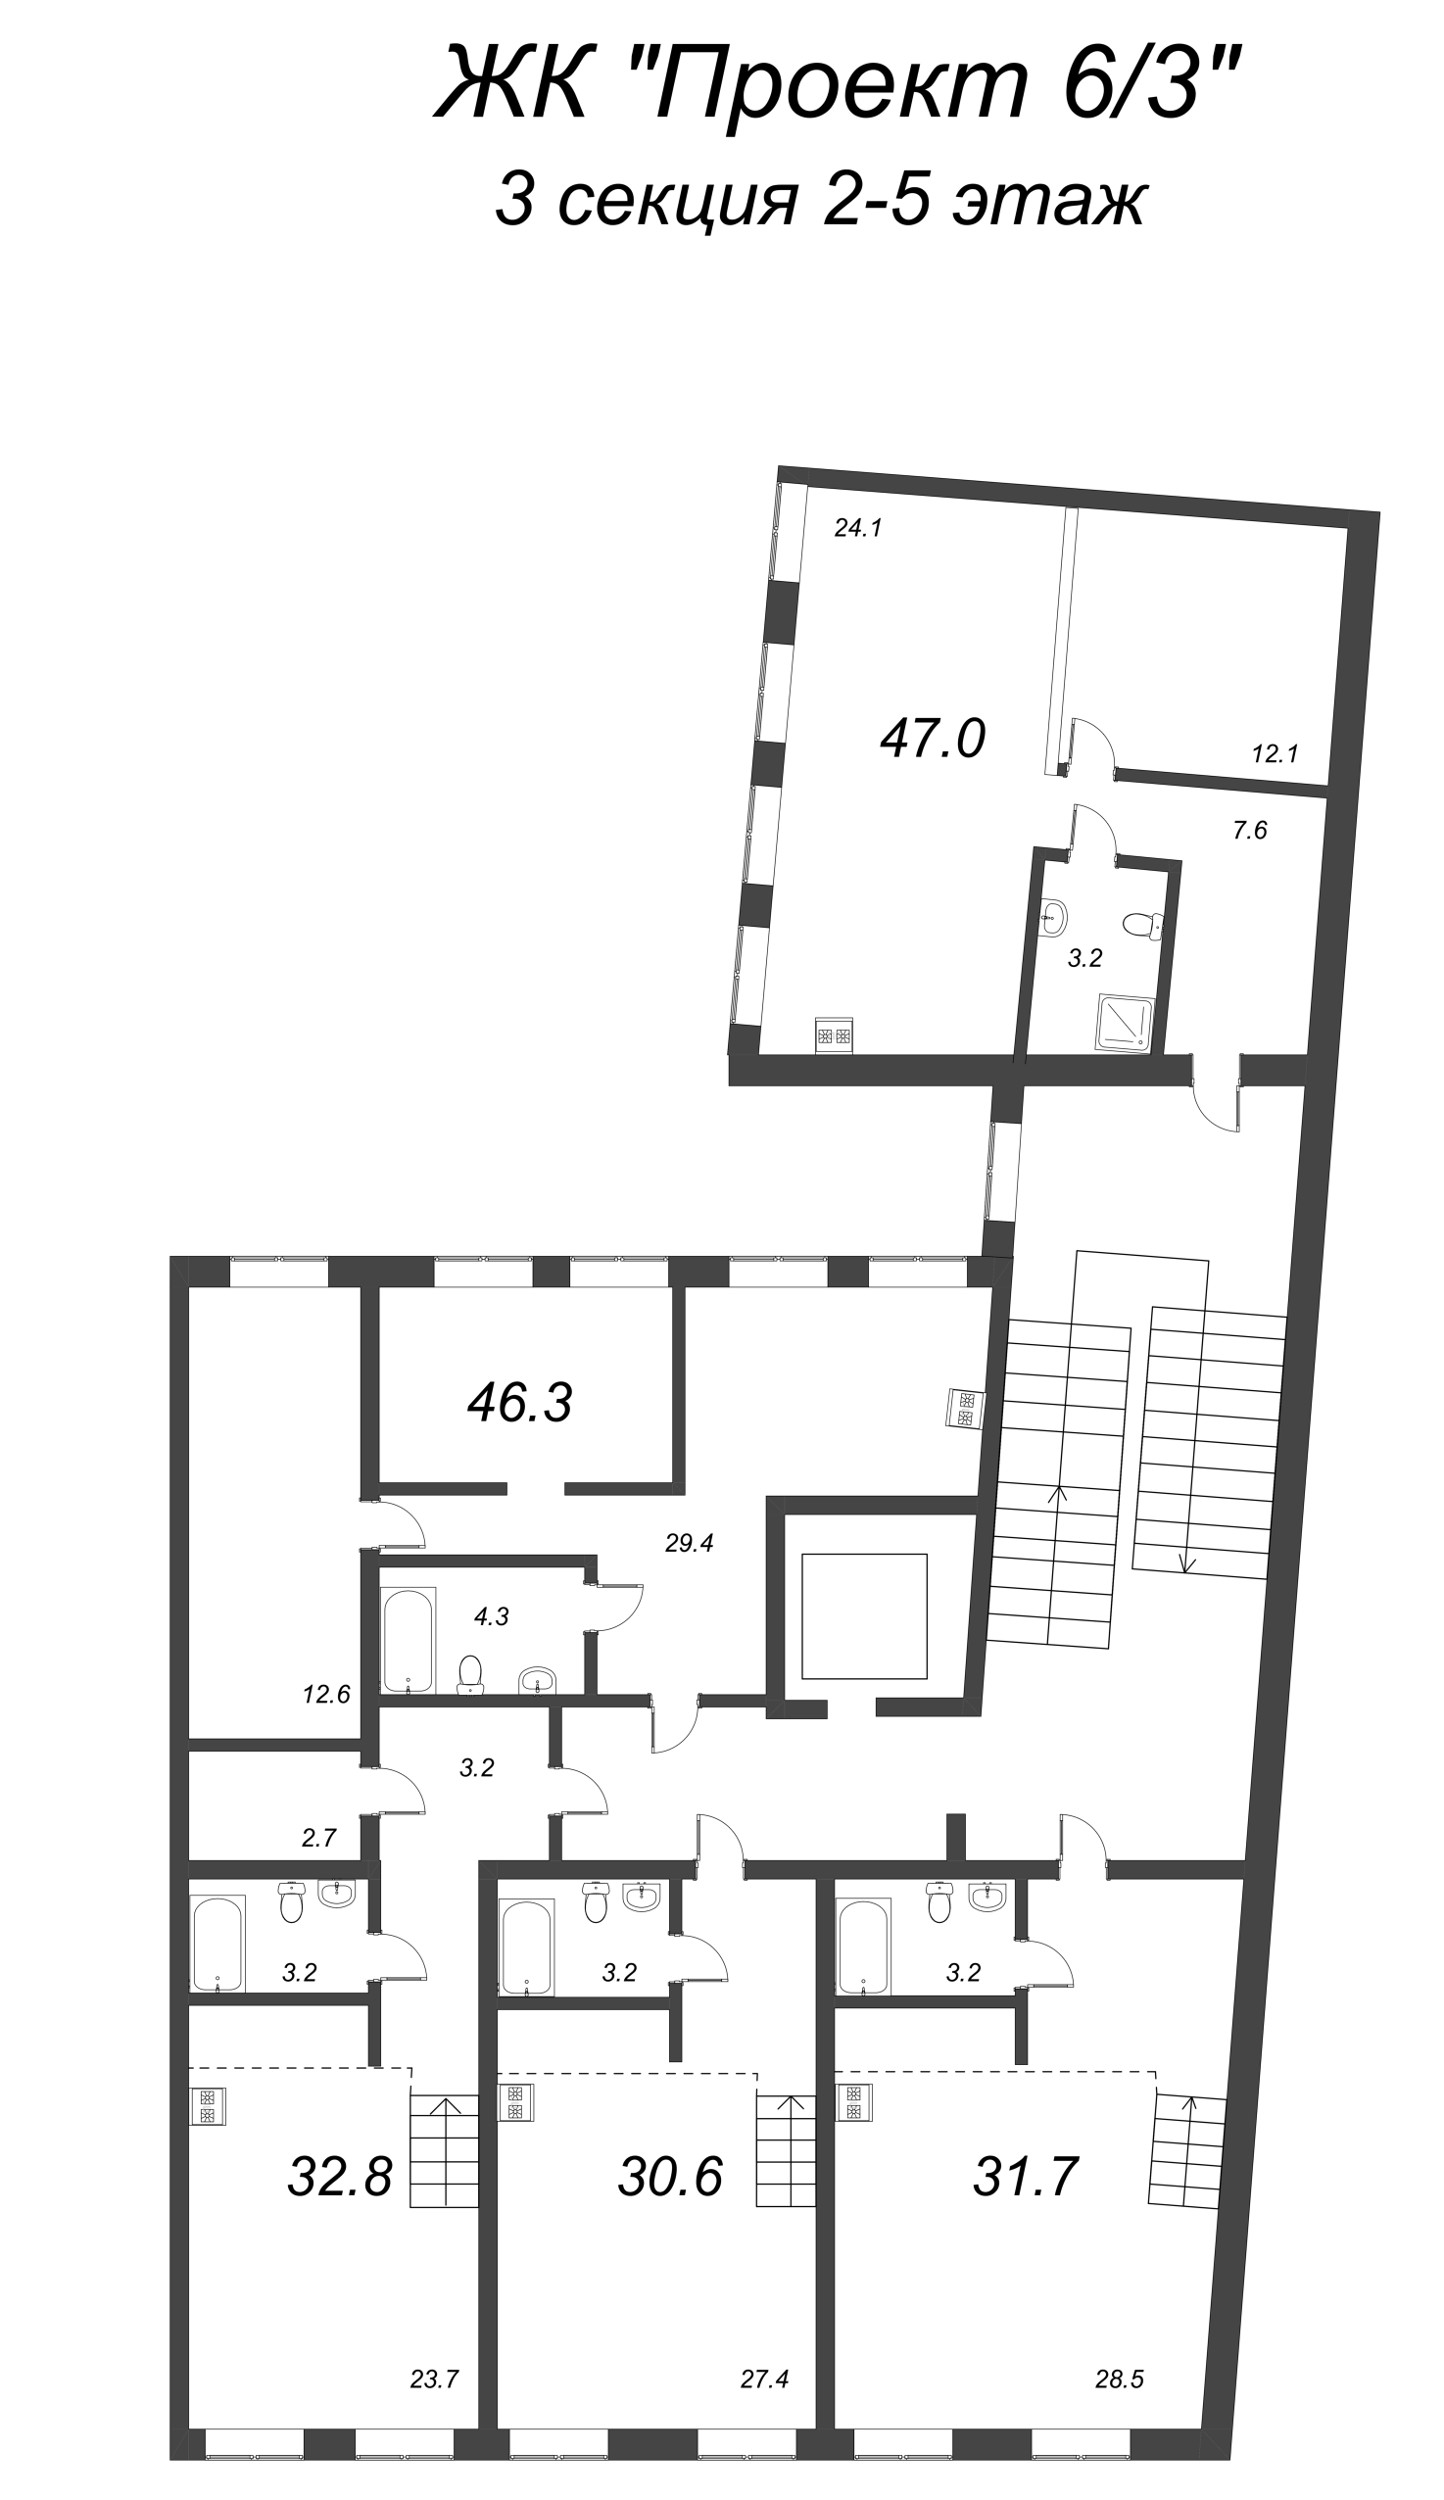 2-комнатная (Евро) квартира, 46.3 м² - планировка этажа